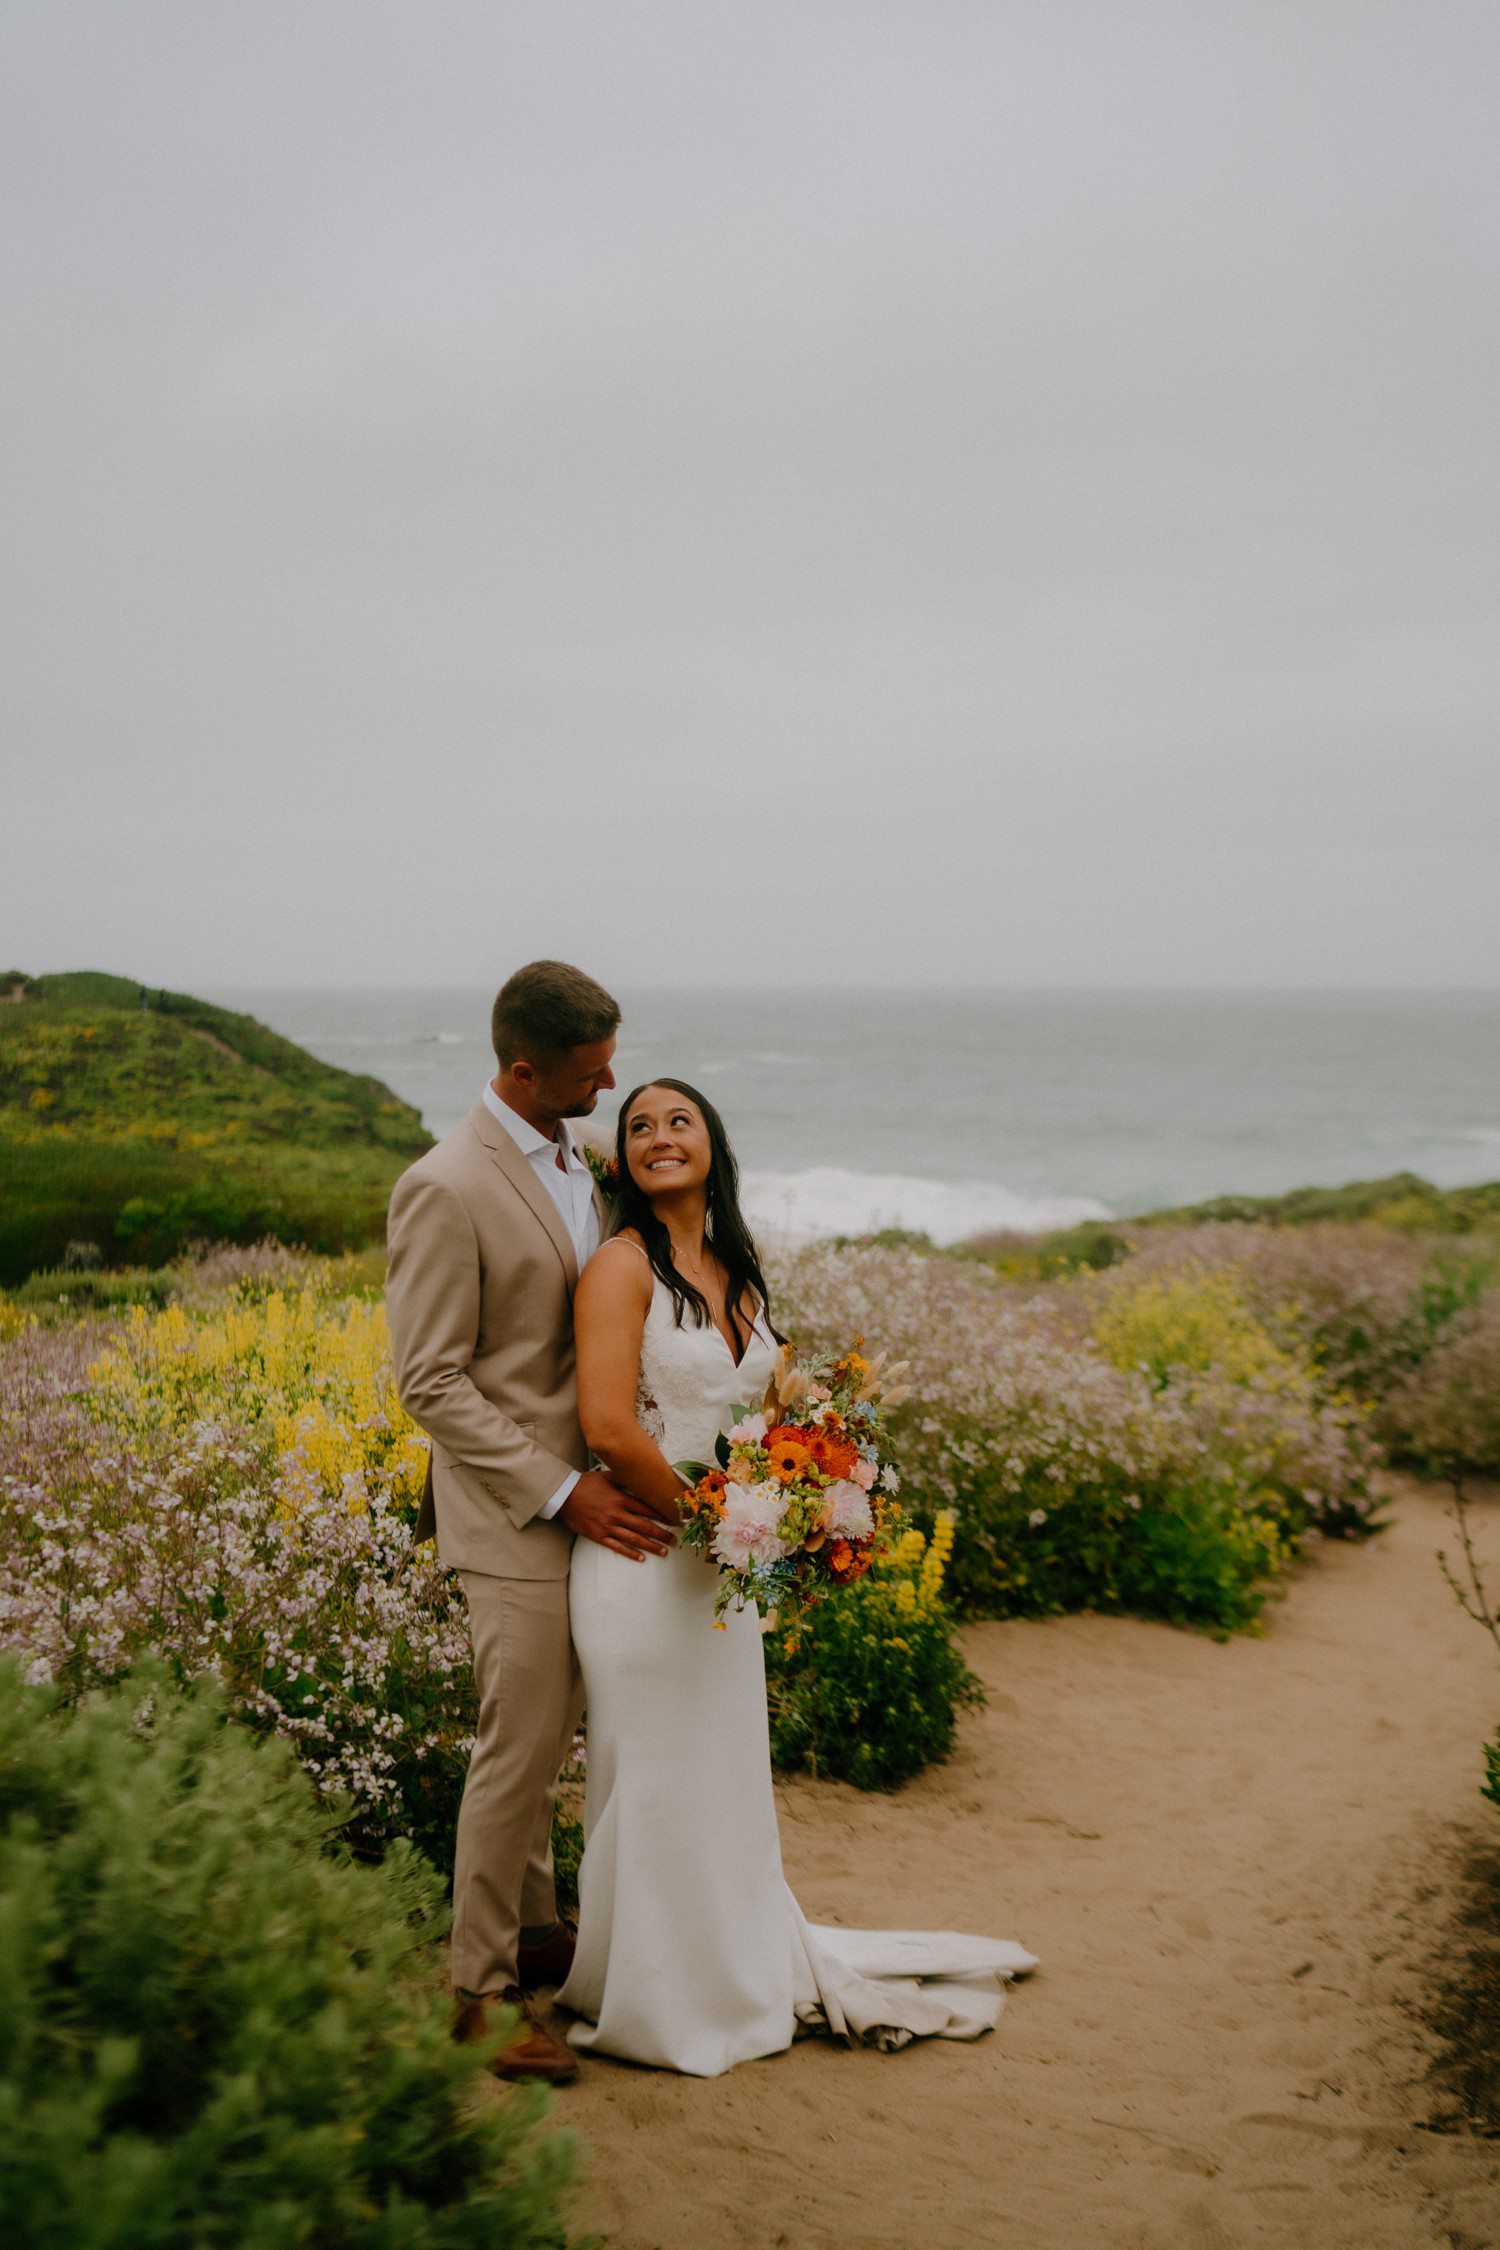 Big Sur beach elopement photos with wildflowers. 